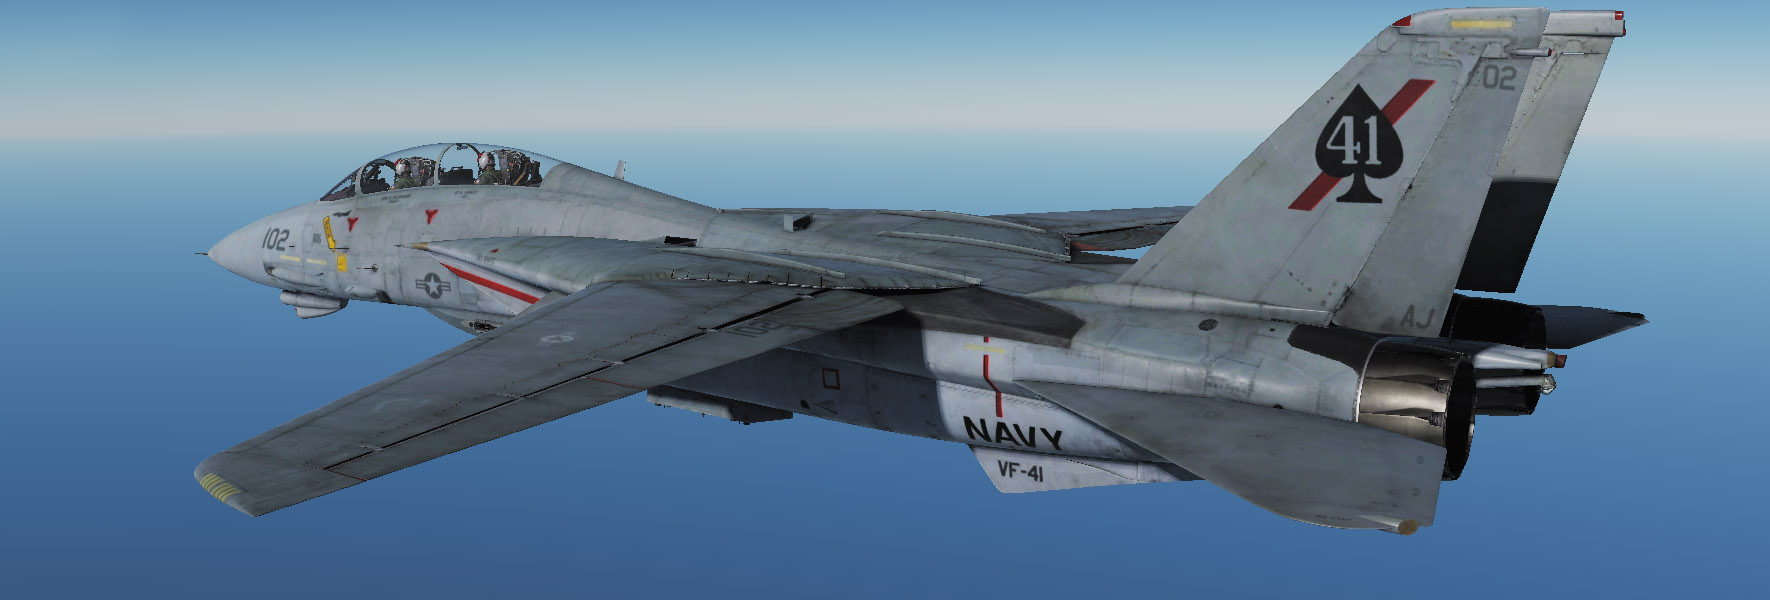 F-14 - Black Aces - VF-41 - Fast Eagle 102 (v3.0)